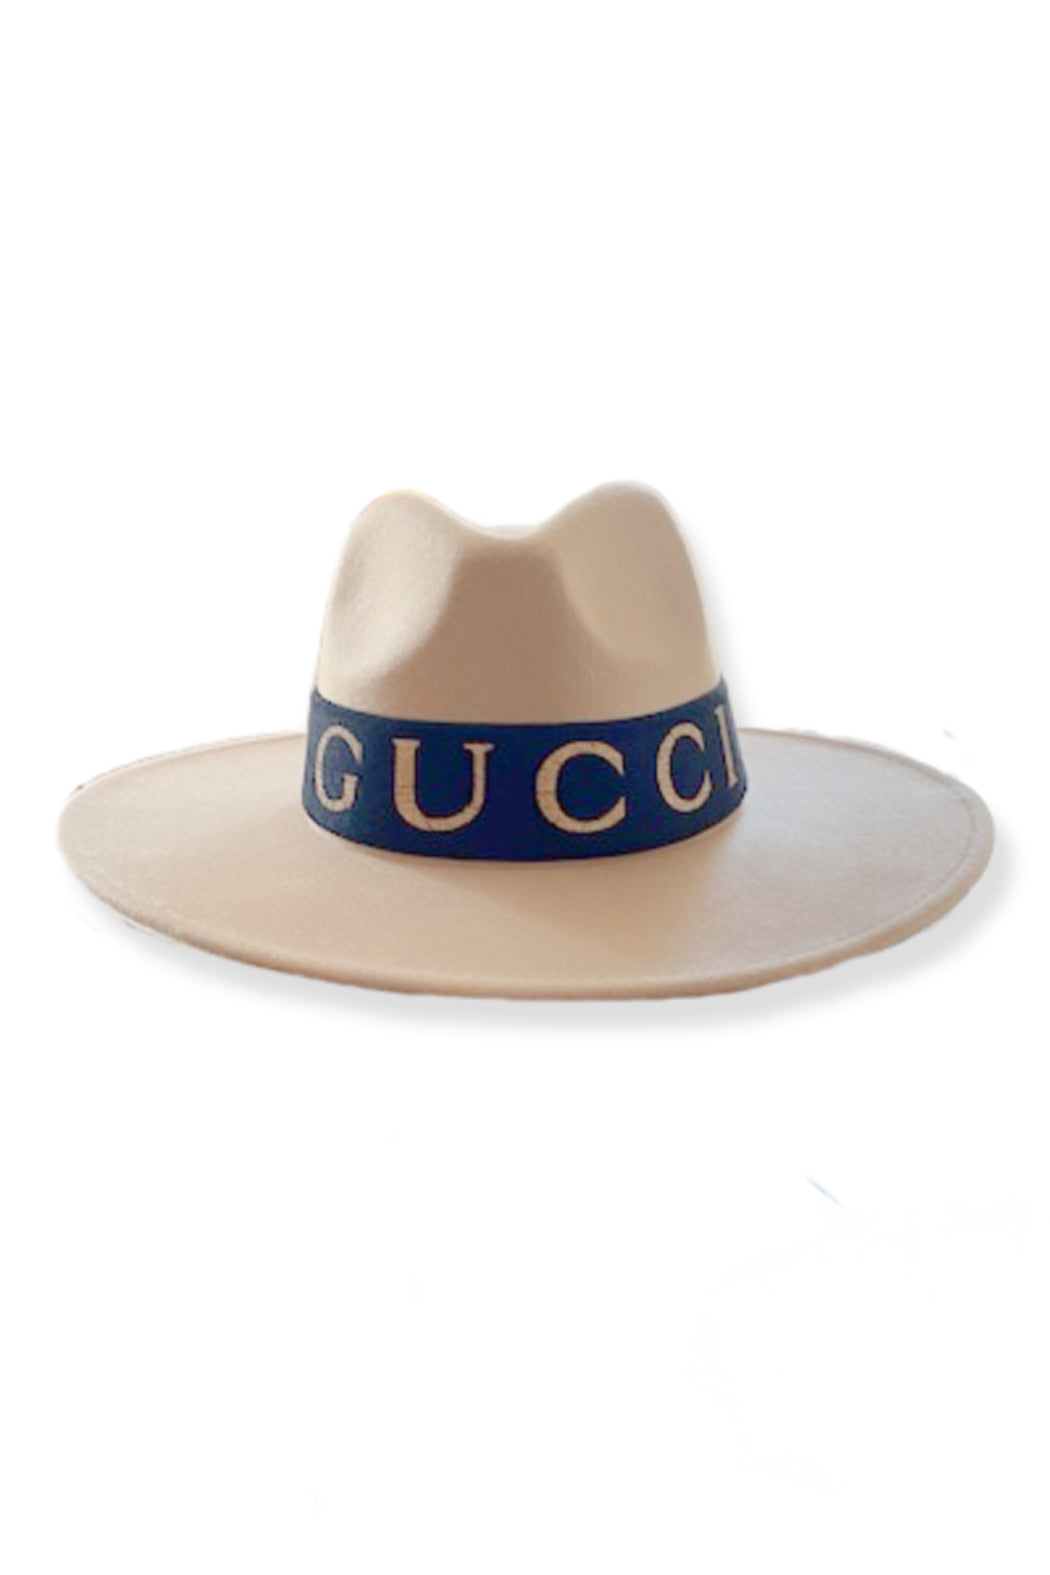 Upcycled Inspired Banded Camel Fedora Hat